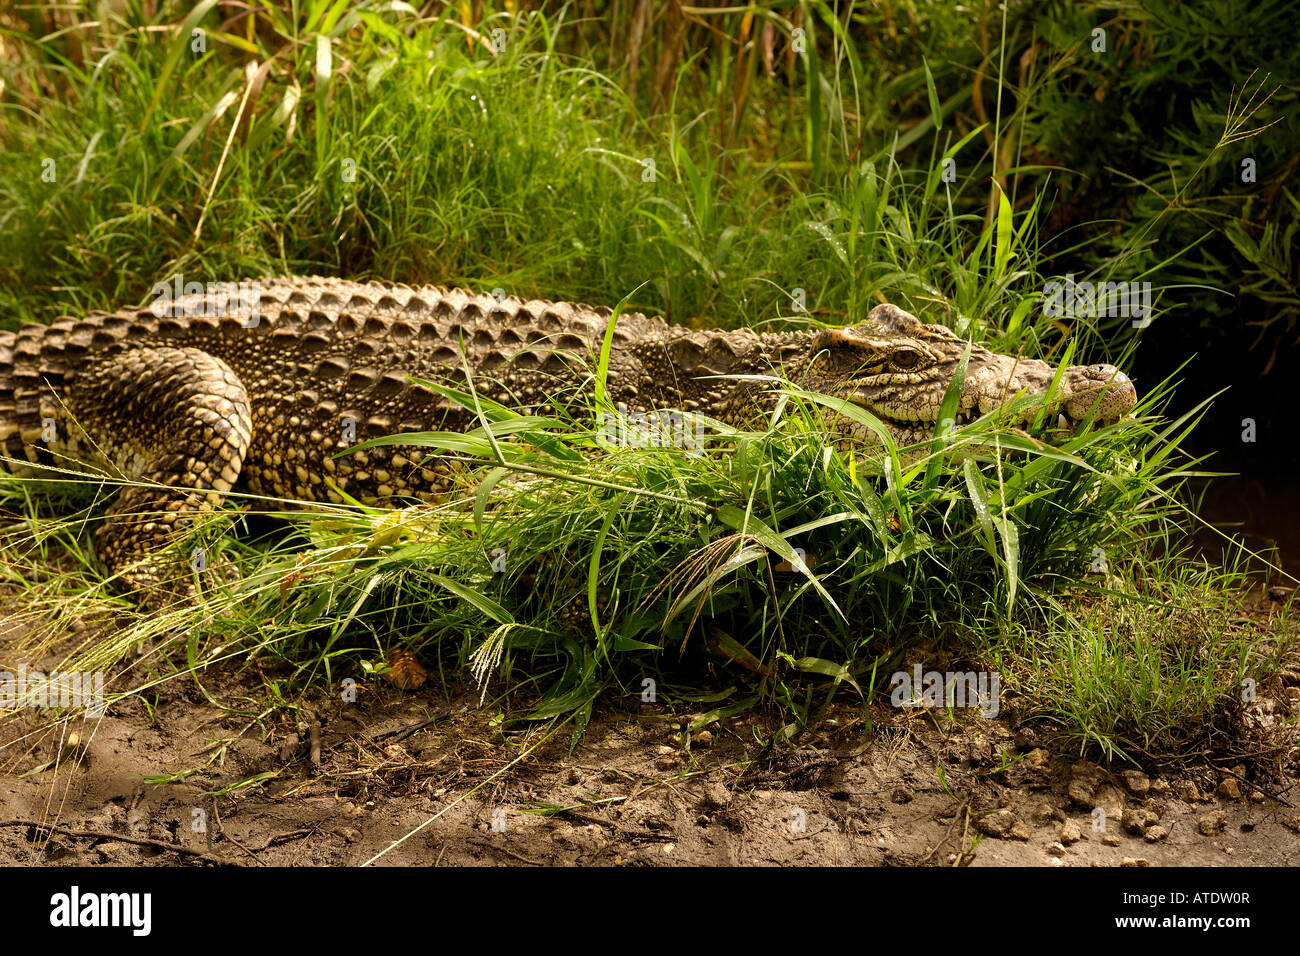 Cuban Crocodile Crocodylus rhombifer endangered captive Florida Stock Photo